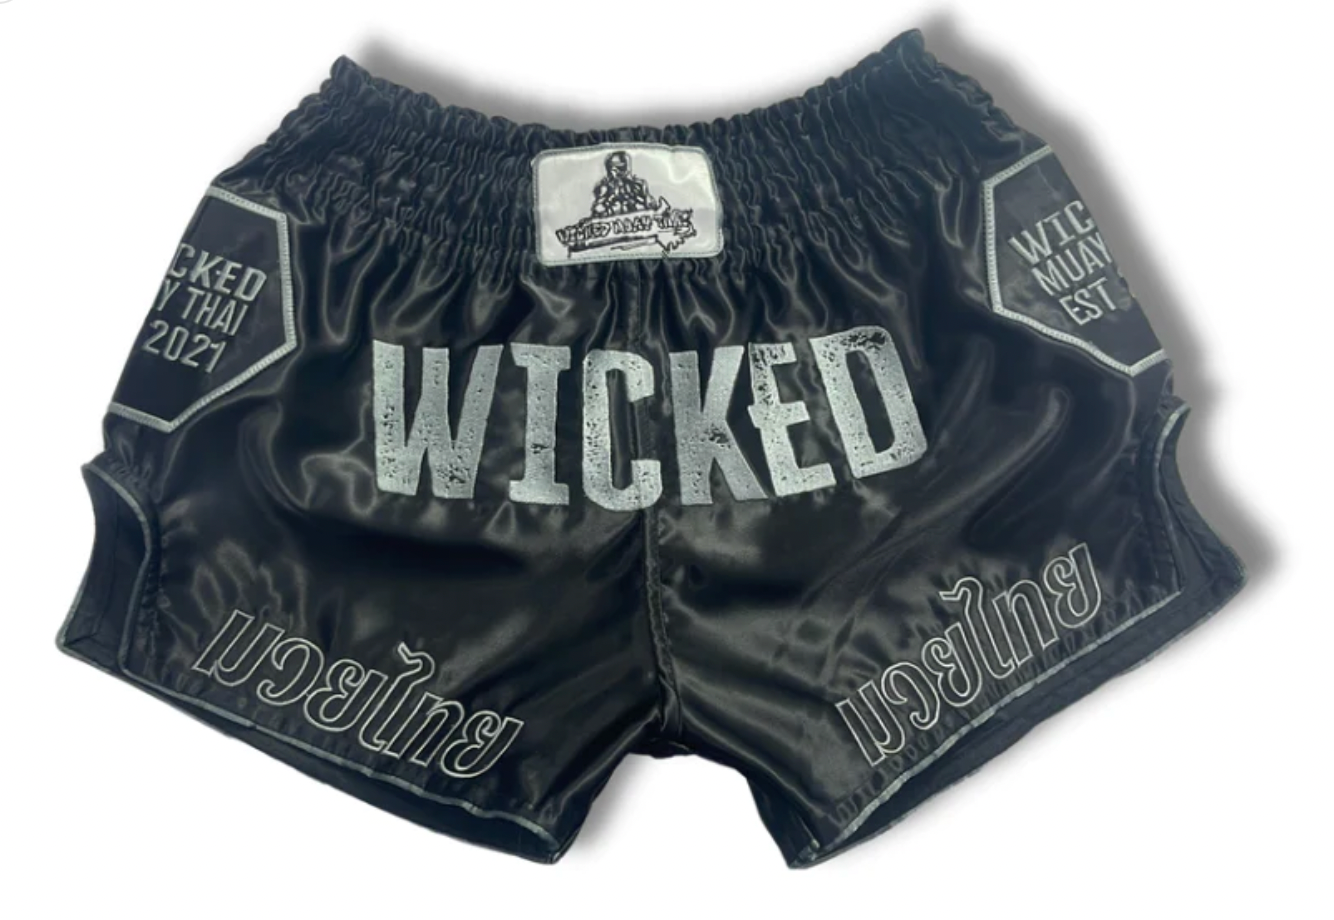 Black & White Muay Thai Shorts – Wicked Muay Thai